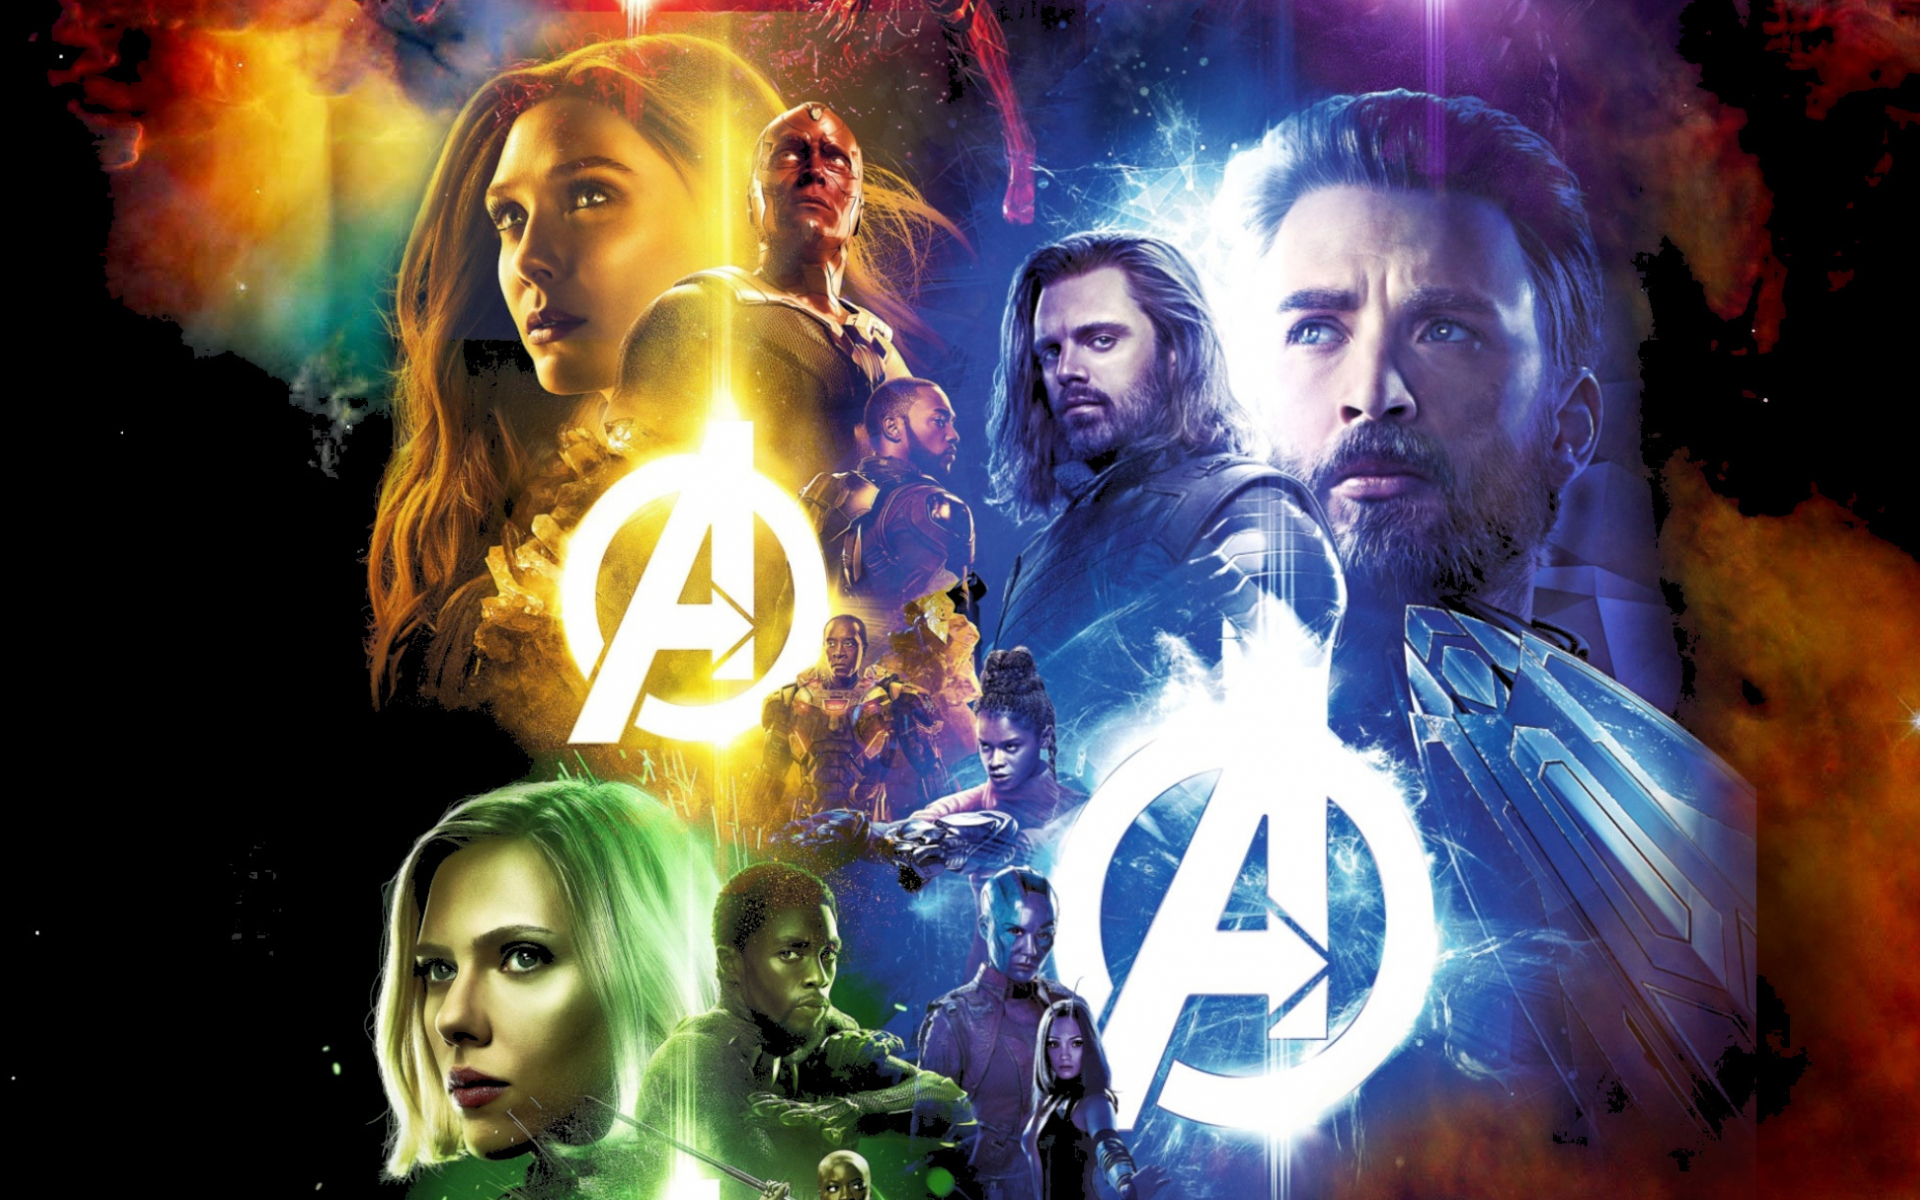 avengers infinity war movie download